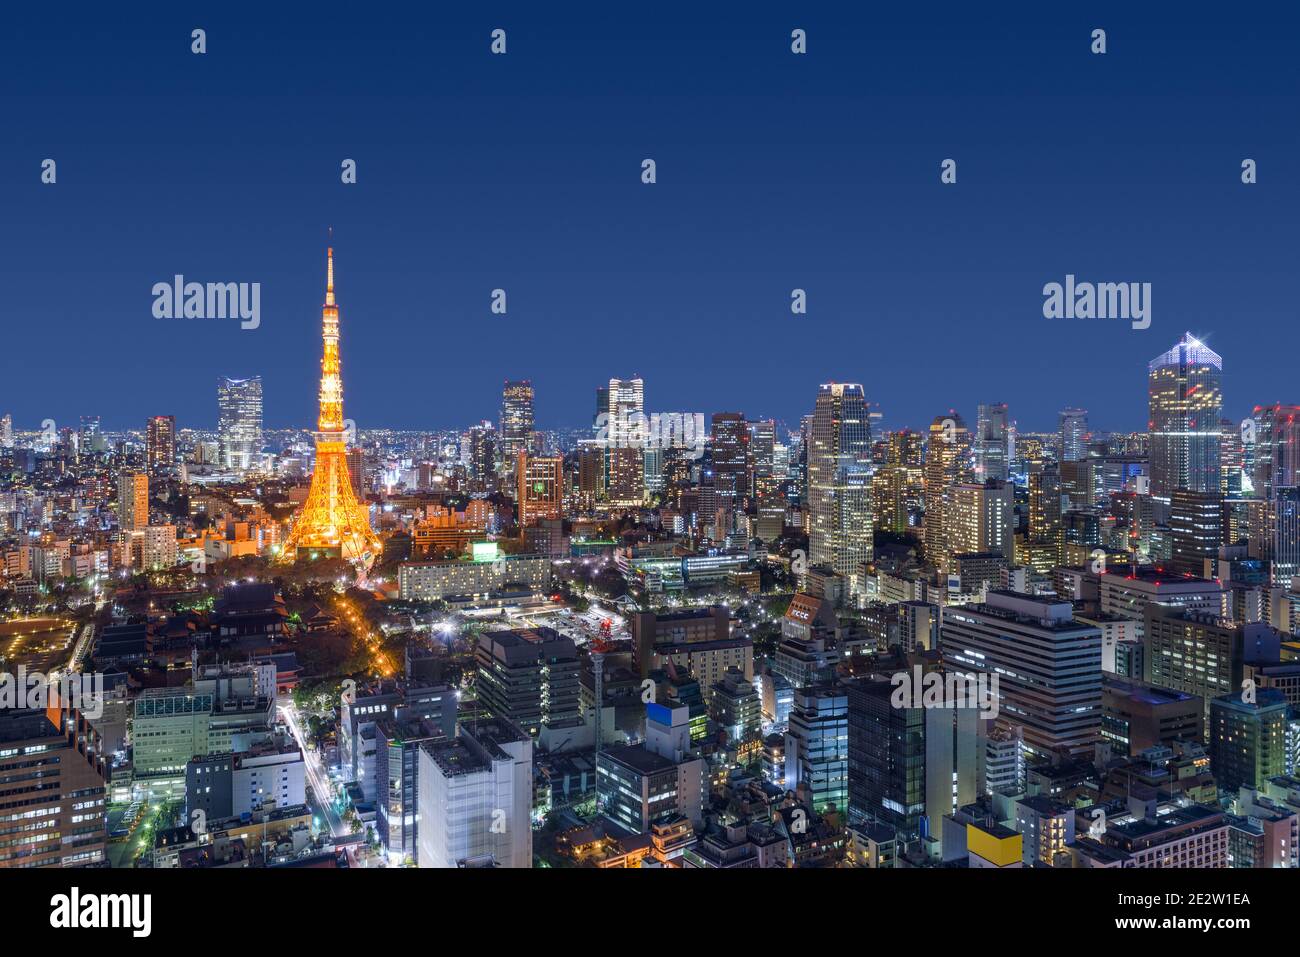 Tokyo, Japan modern urban skyline at night overlooking the tower. Stock Photo